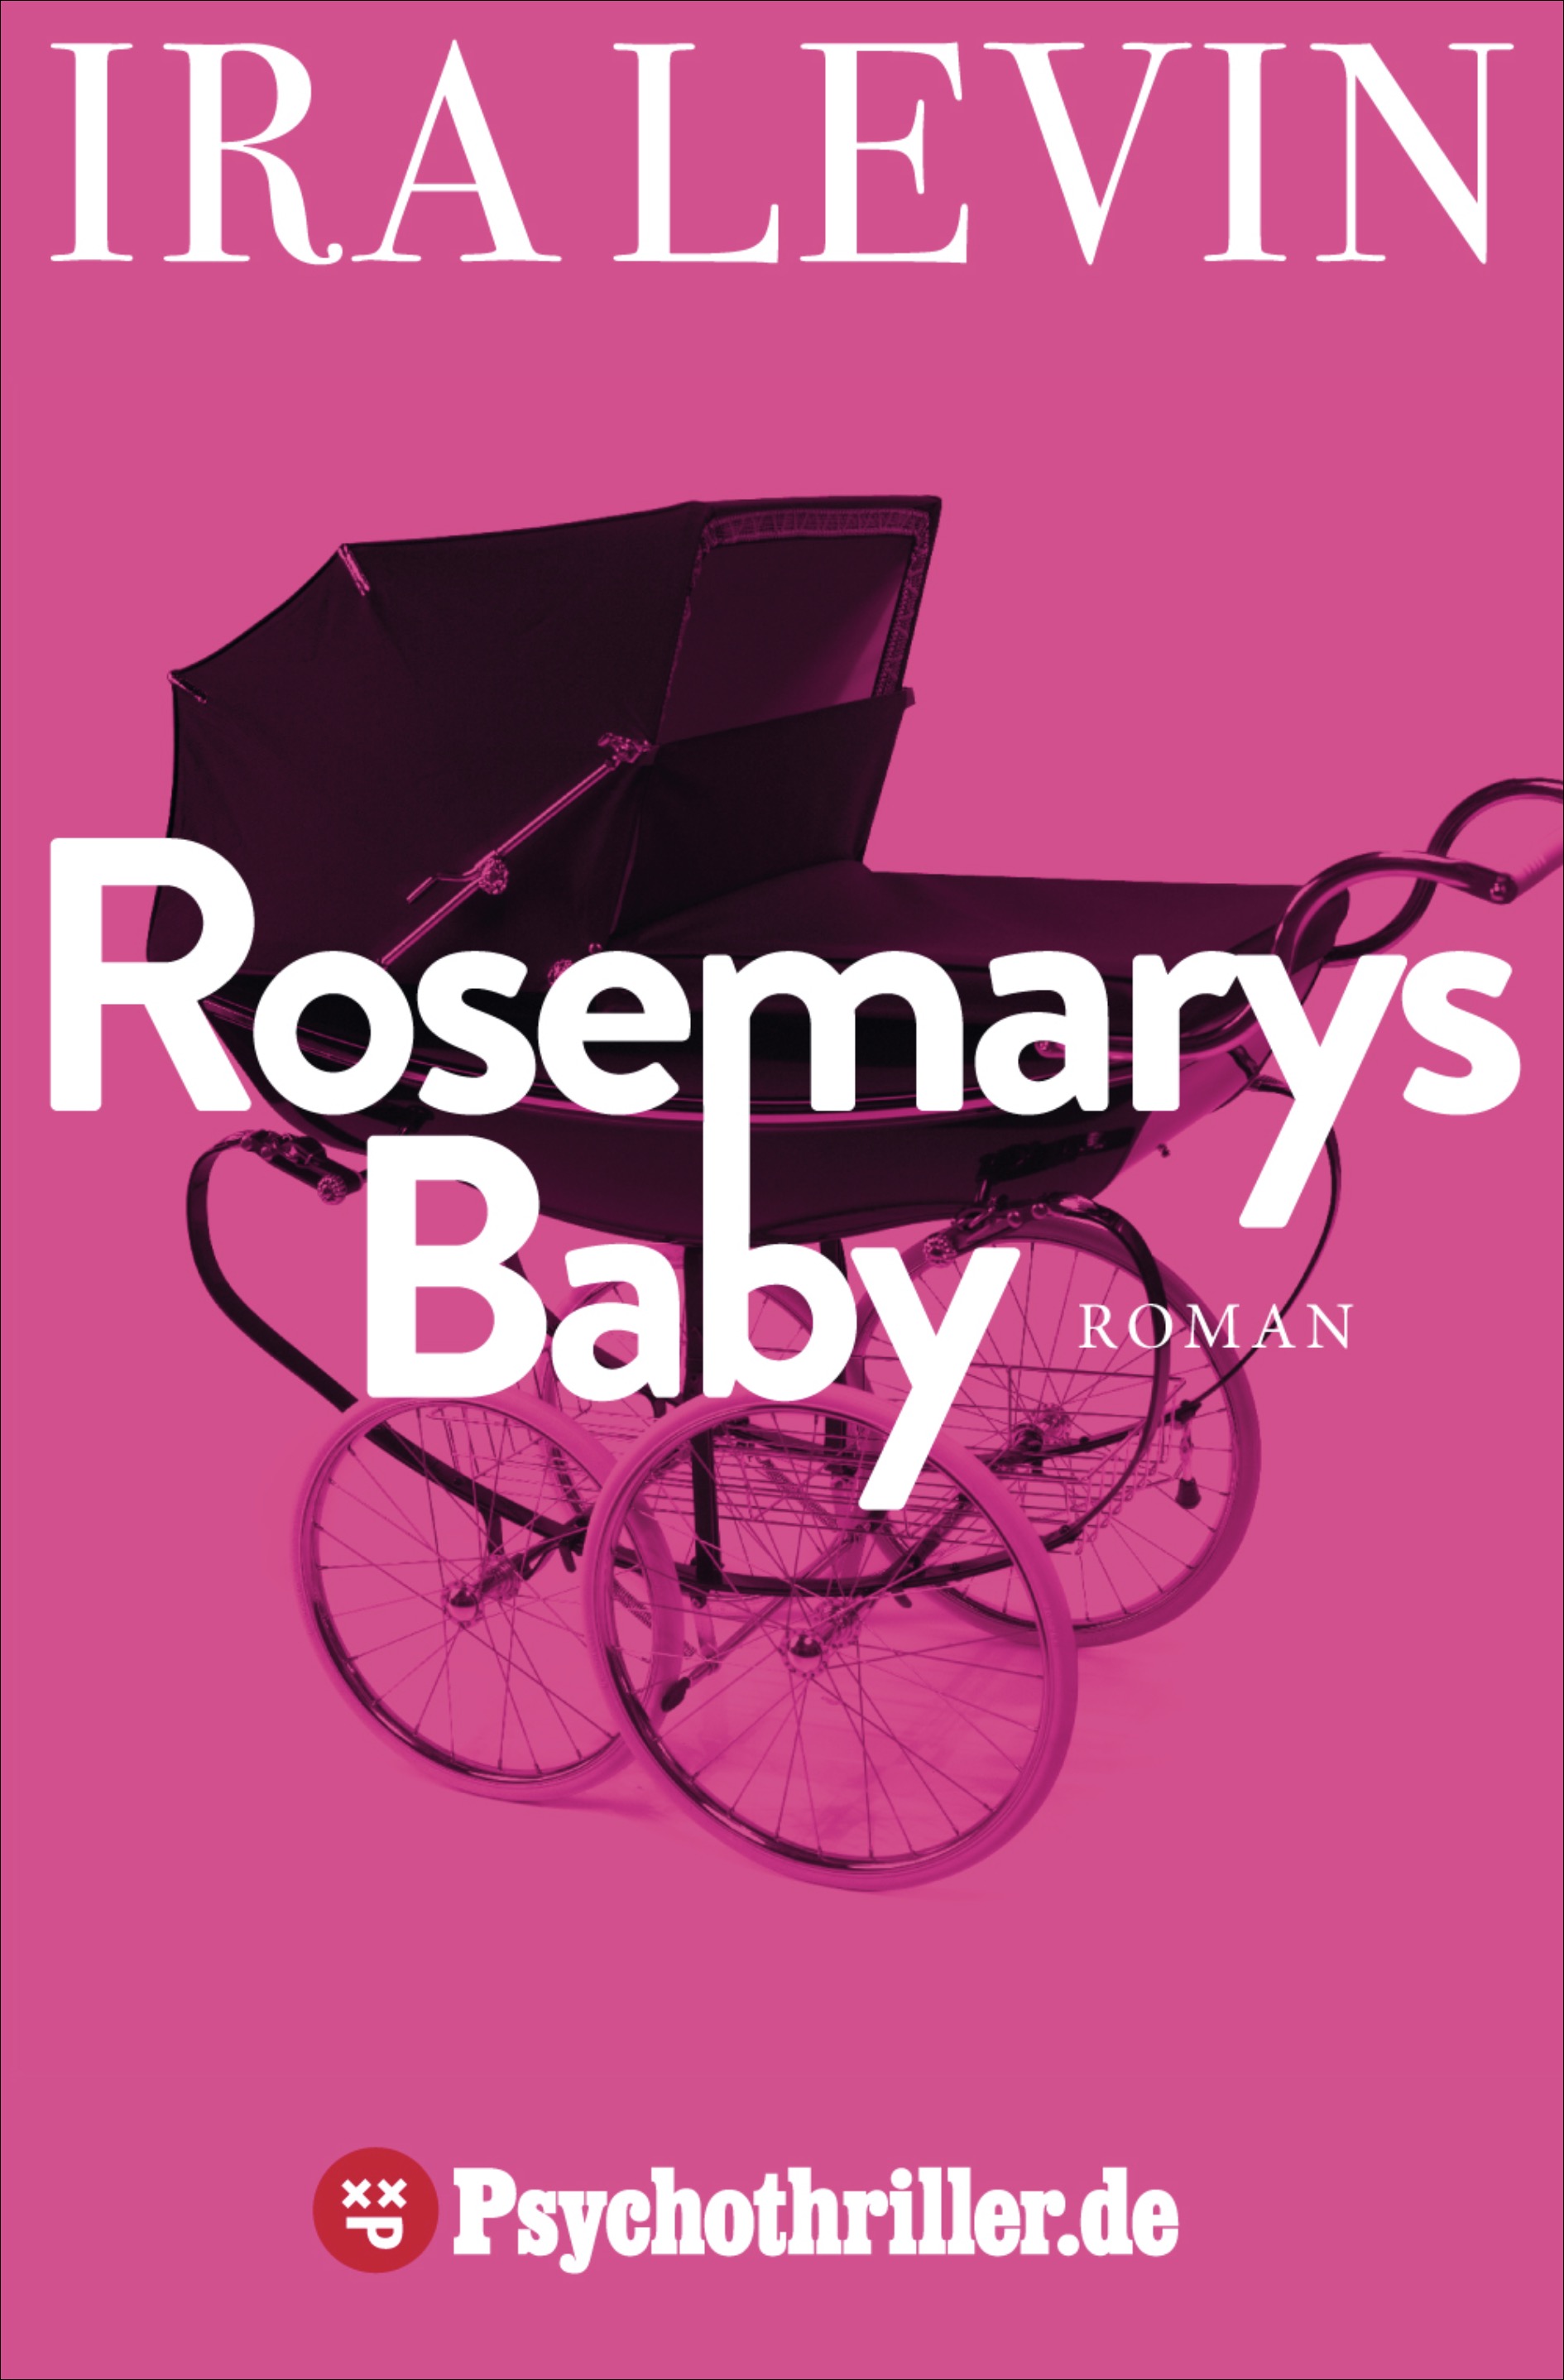 Ira Levin: Rosemarys Baby